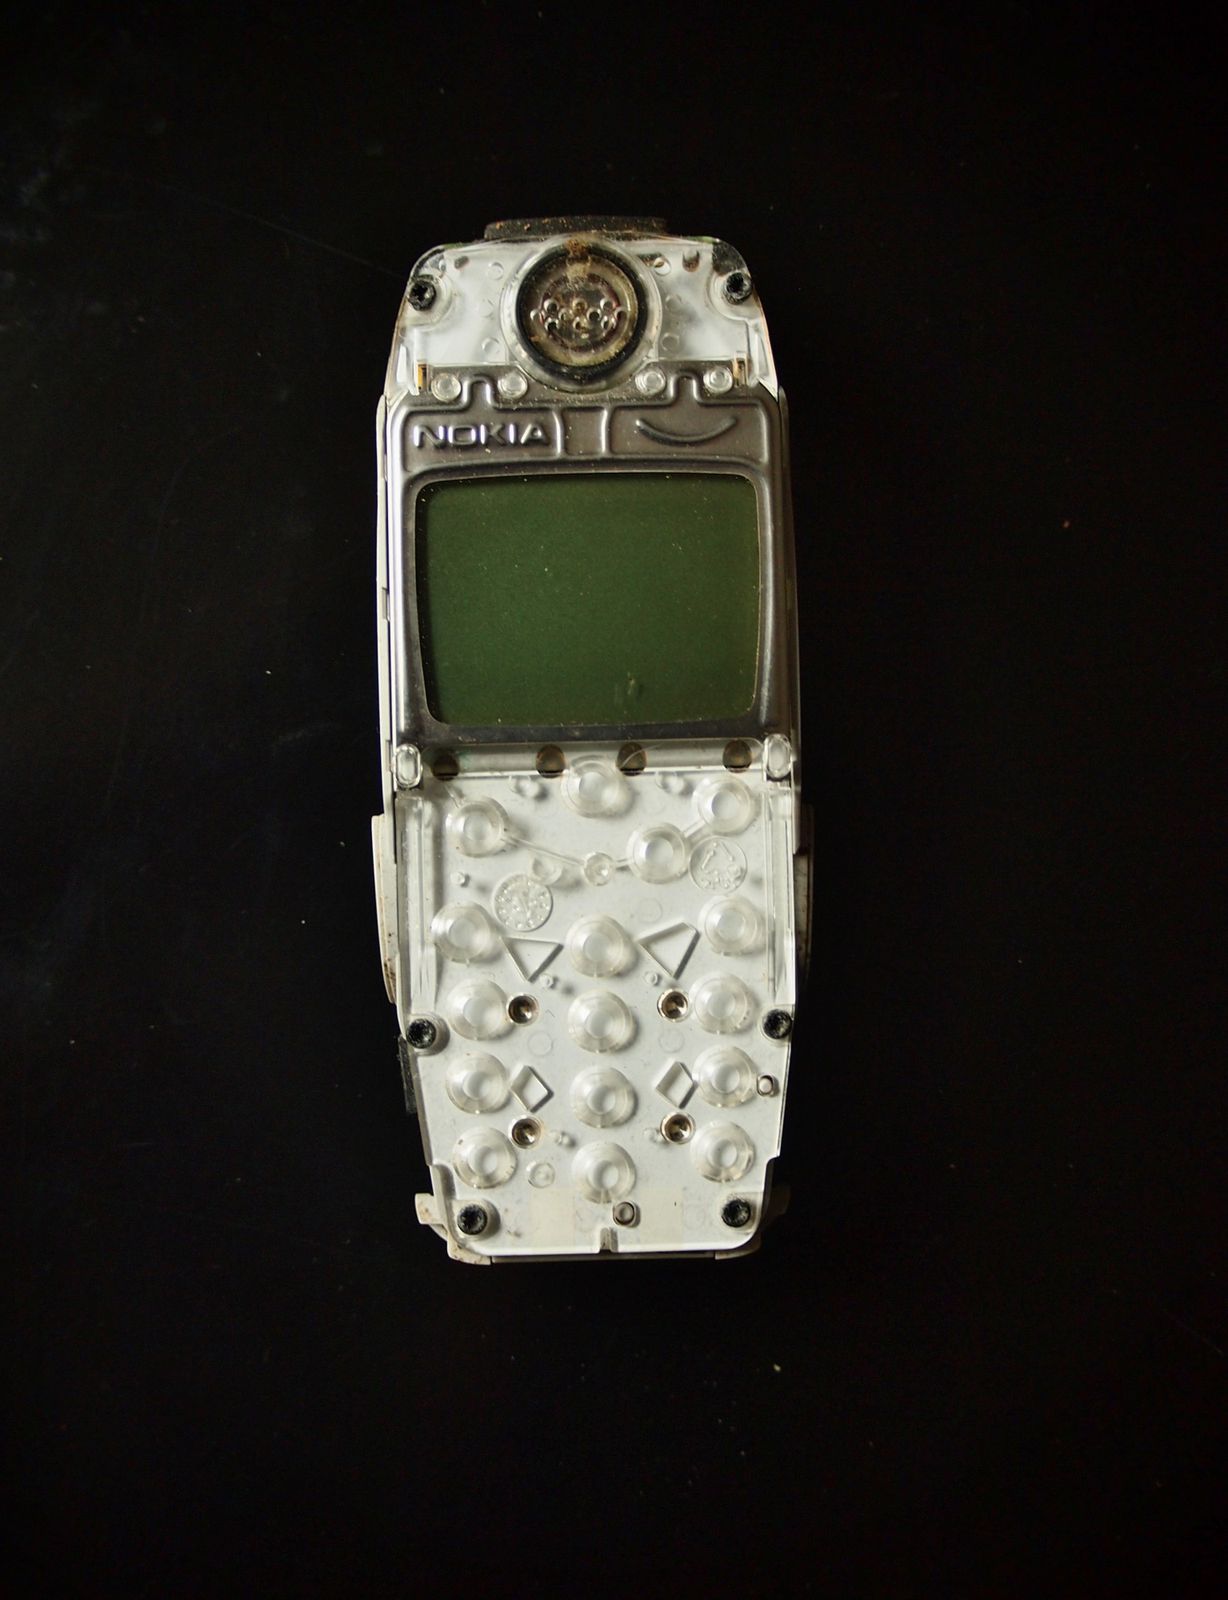 Nokia-3310-sans-coque.JPG